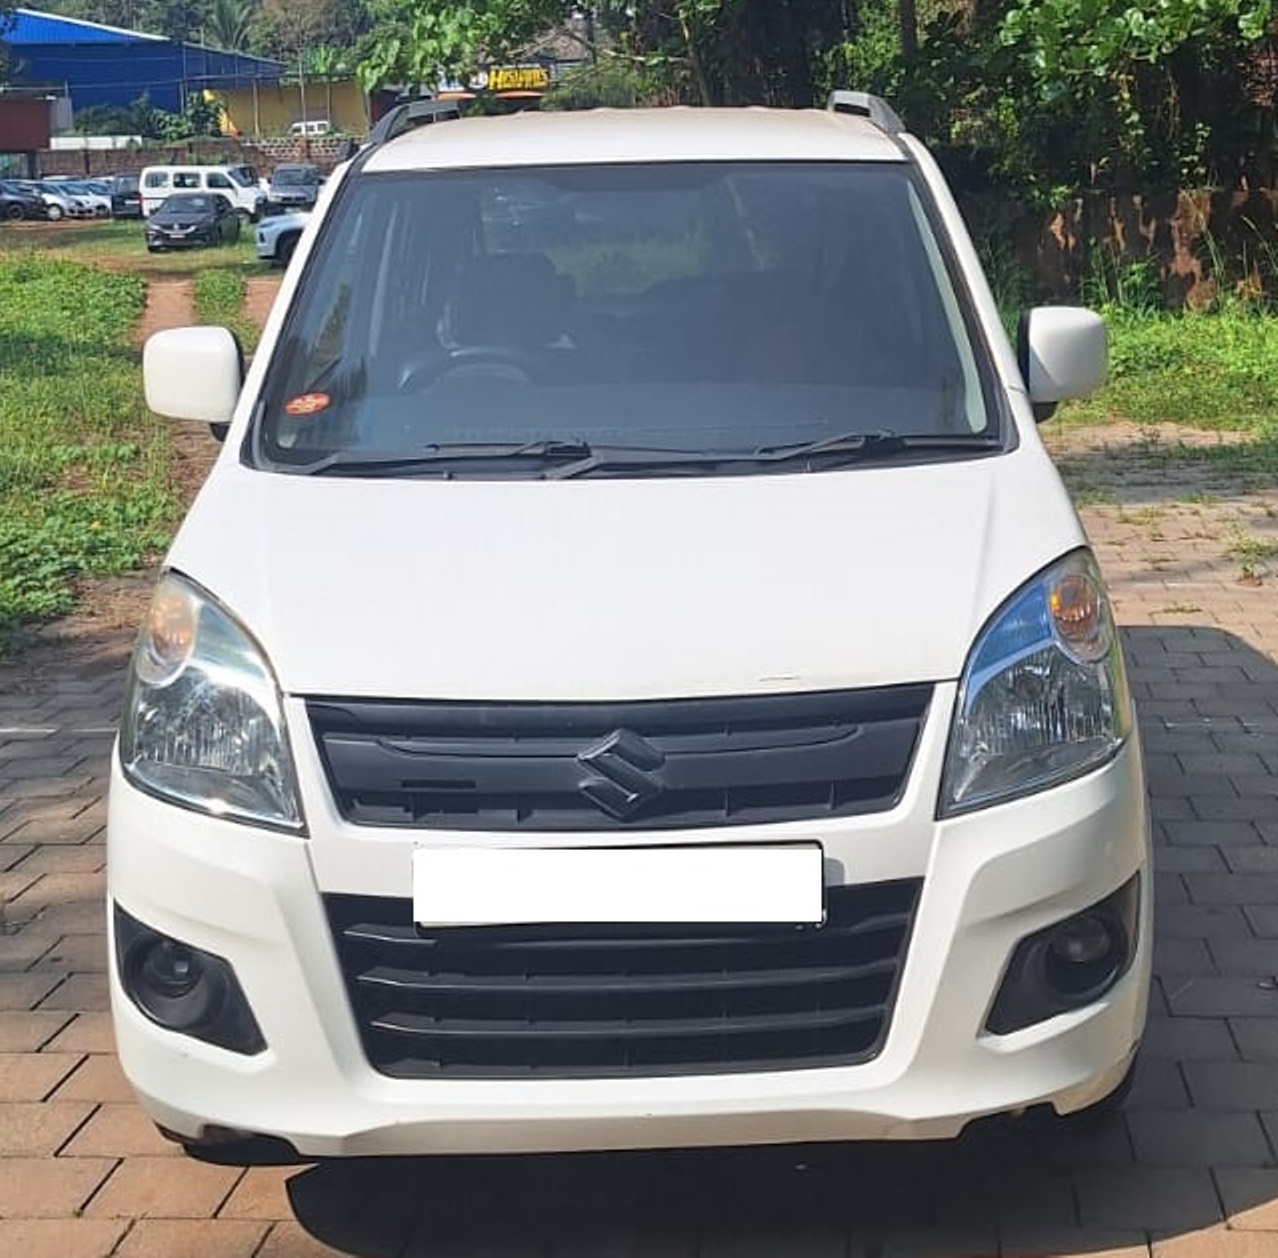 MARUTI WAGON R 2018 Second-hand Car for Sale in Kannur